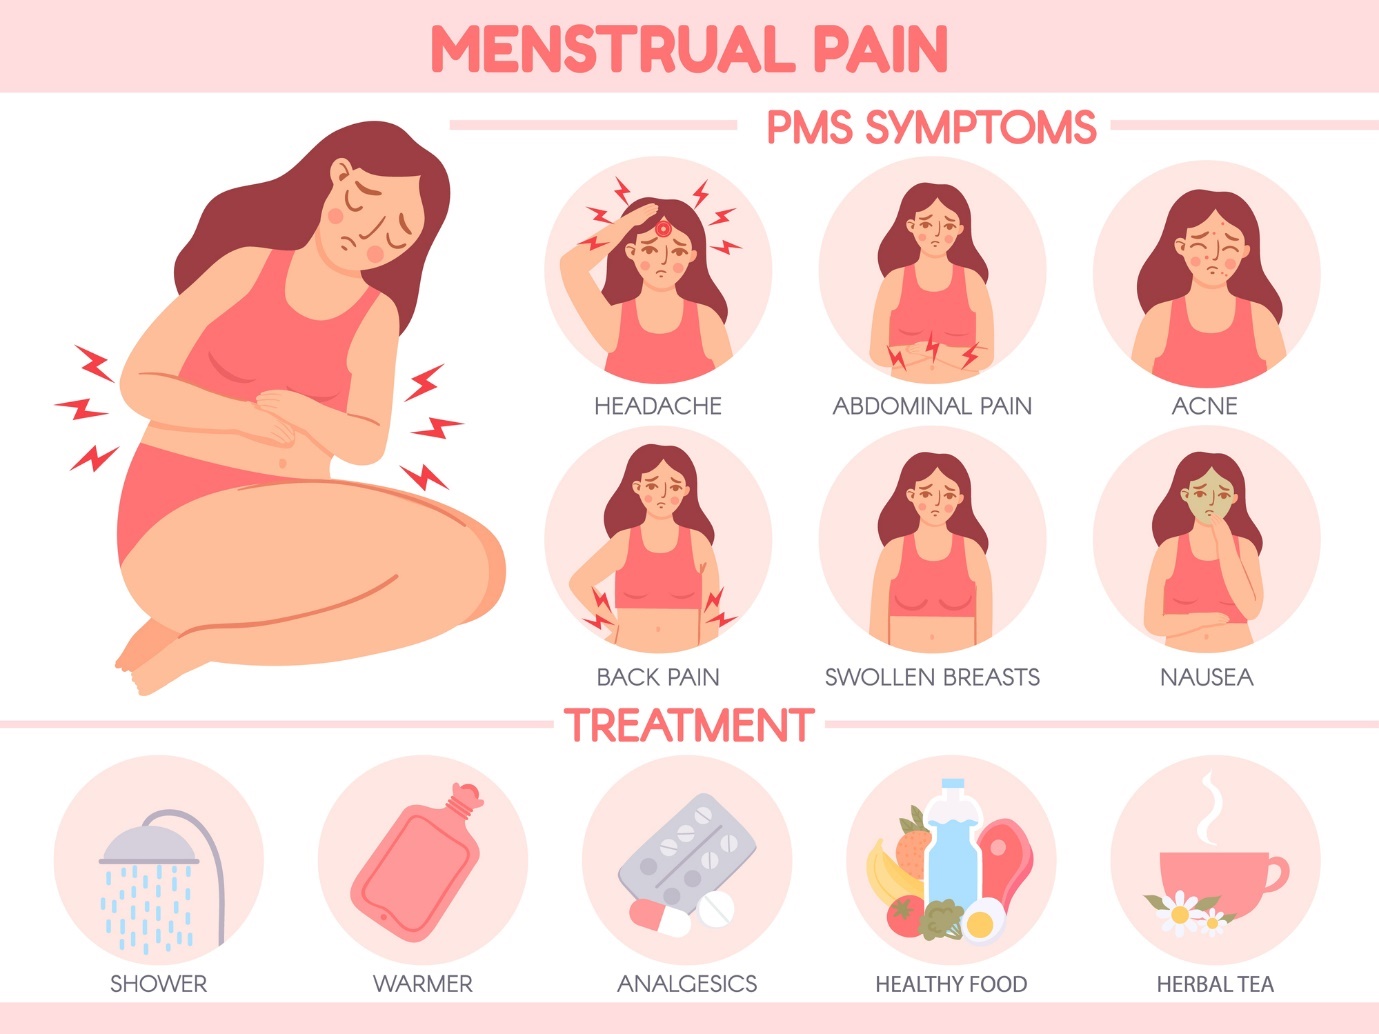 Menstrual pain. Symptoms of PMS: headache, abdominal pain, acne, back pain, sensitive breasts, nausea. Care: warm shower, heat application, analgesics, healthy food, warm herbal tea.